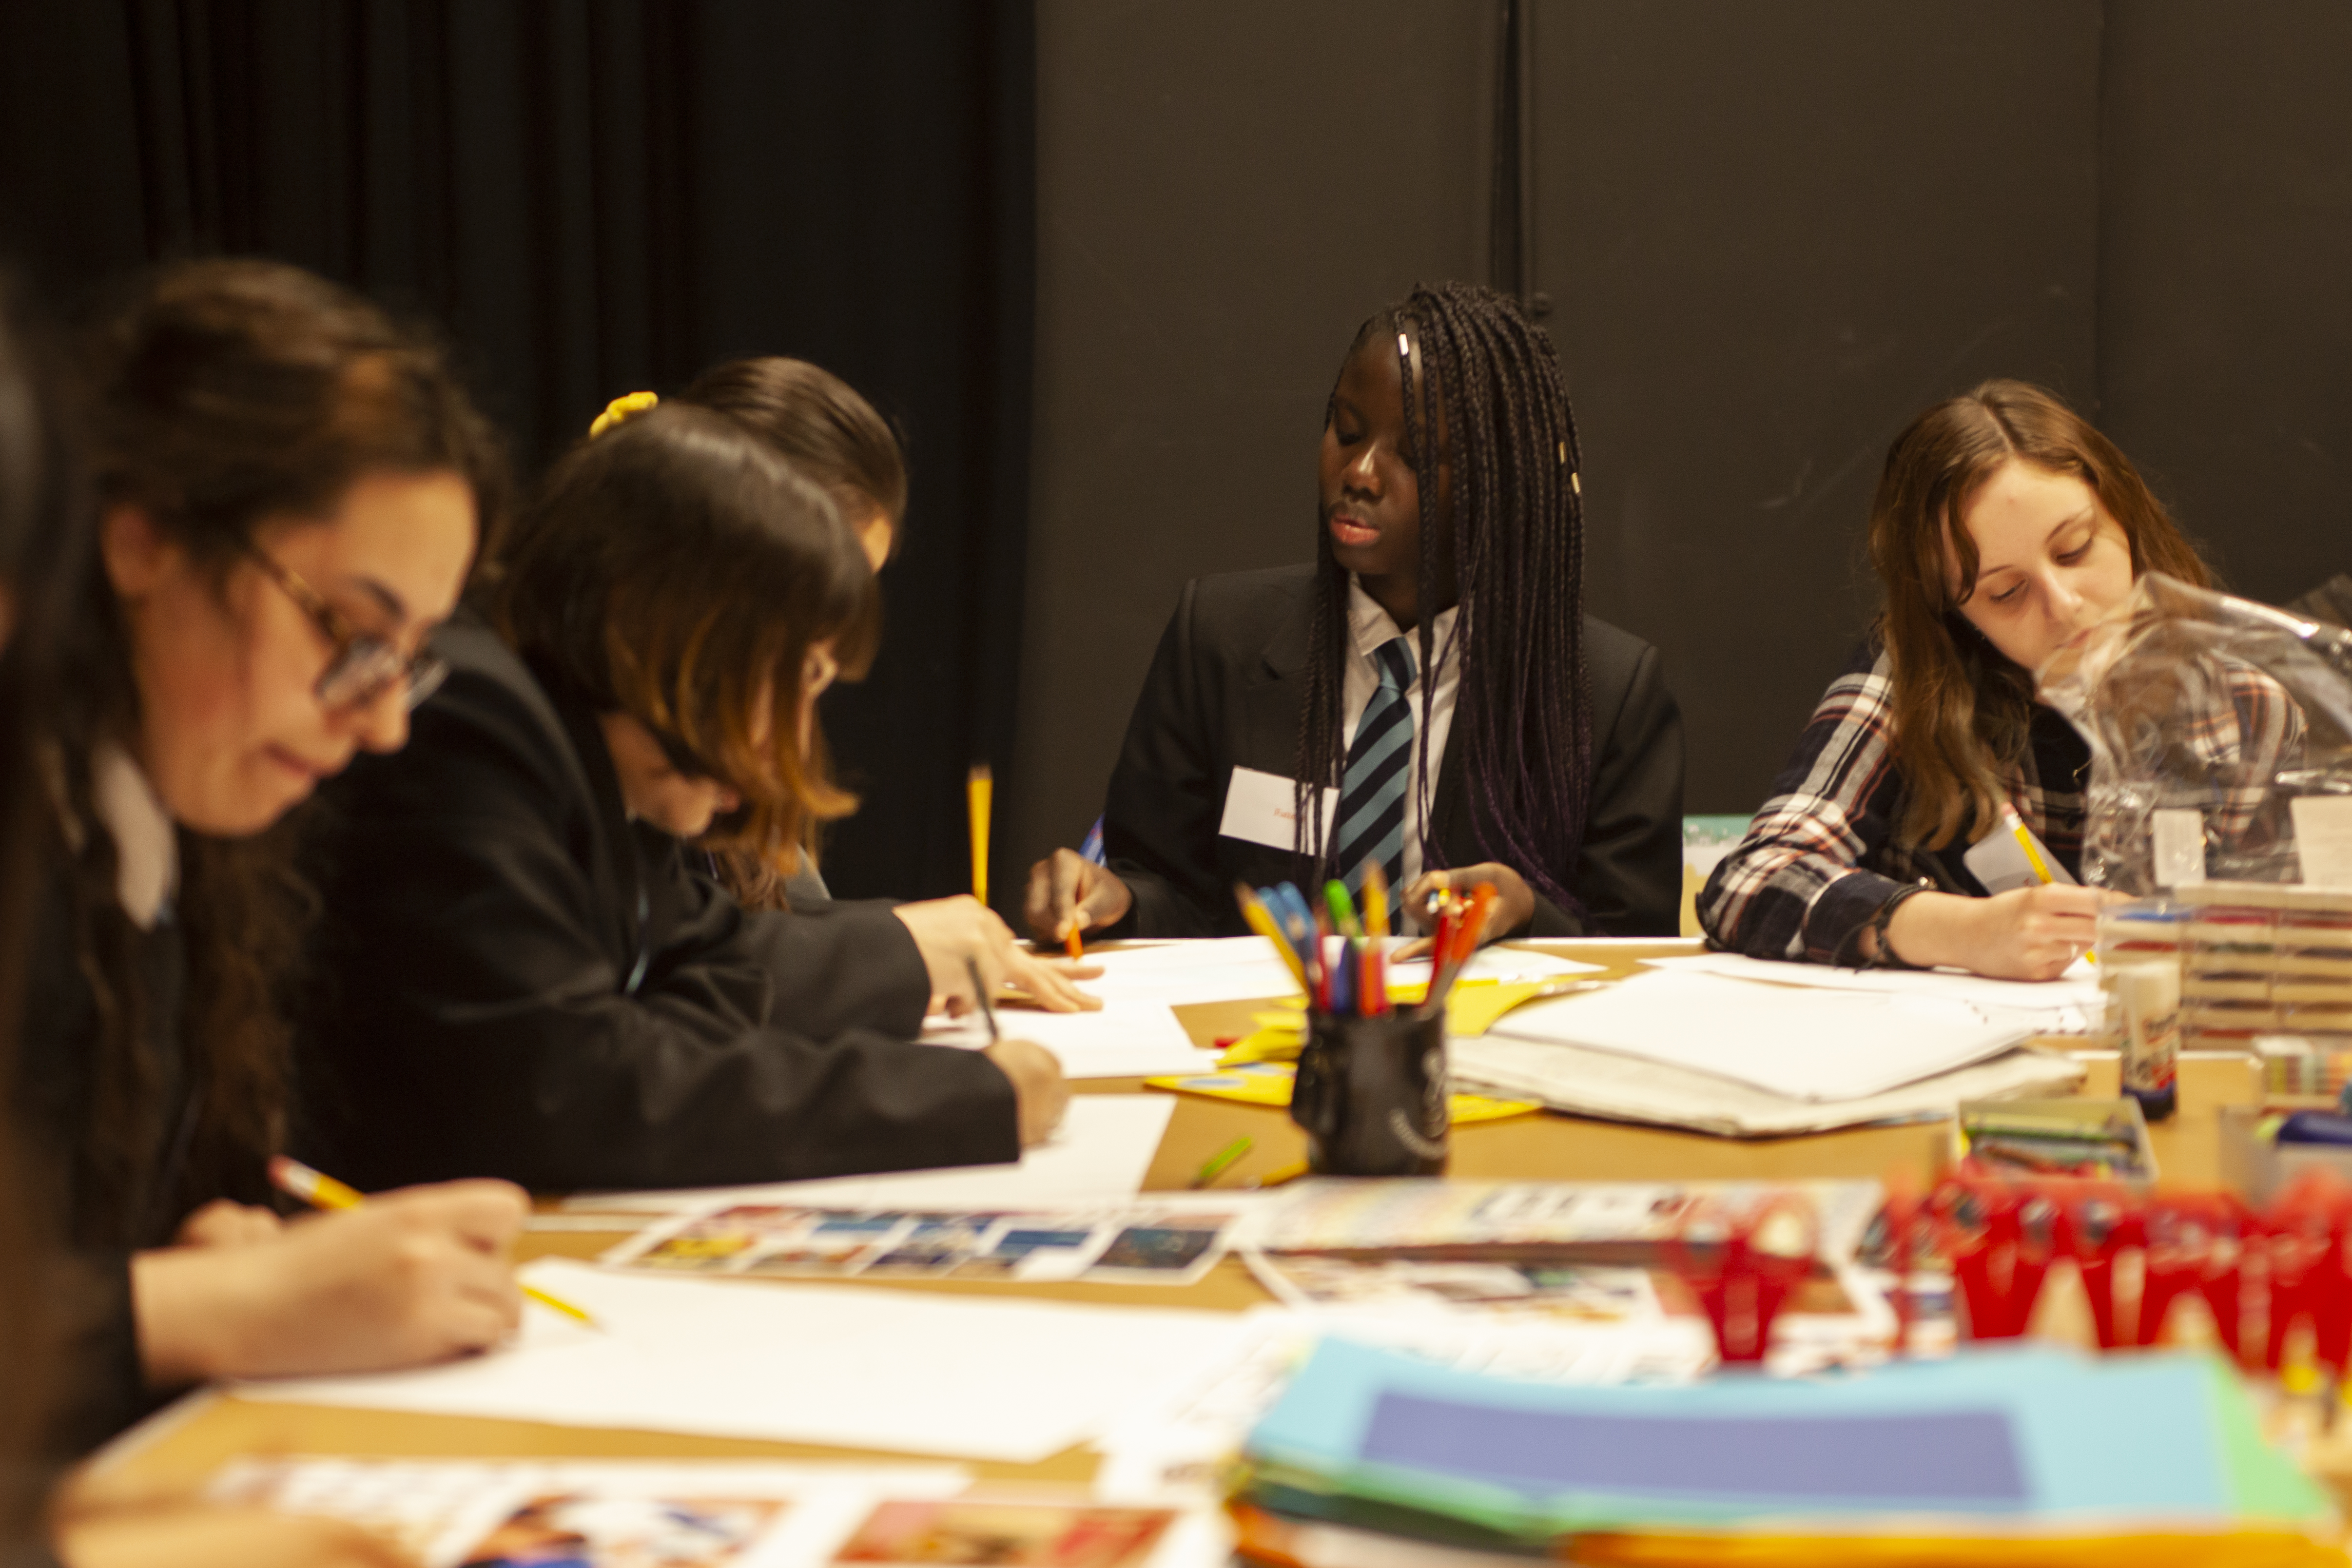 Pupils make art during a school event at North Edinburgh Arts